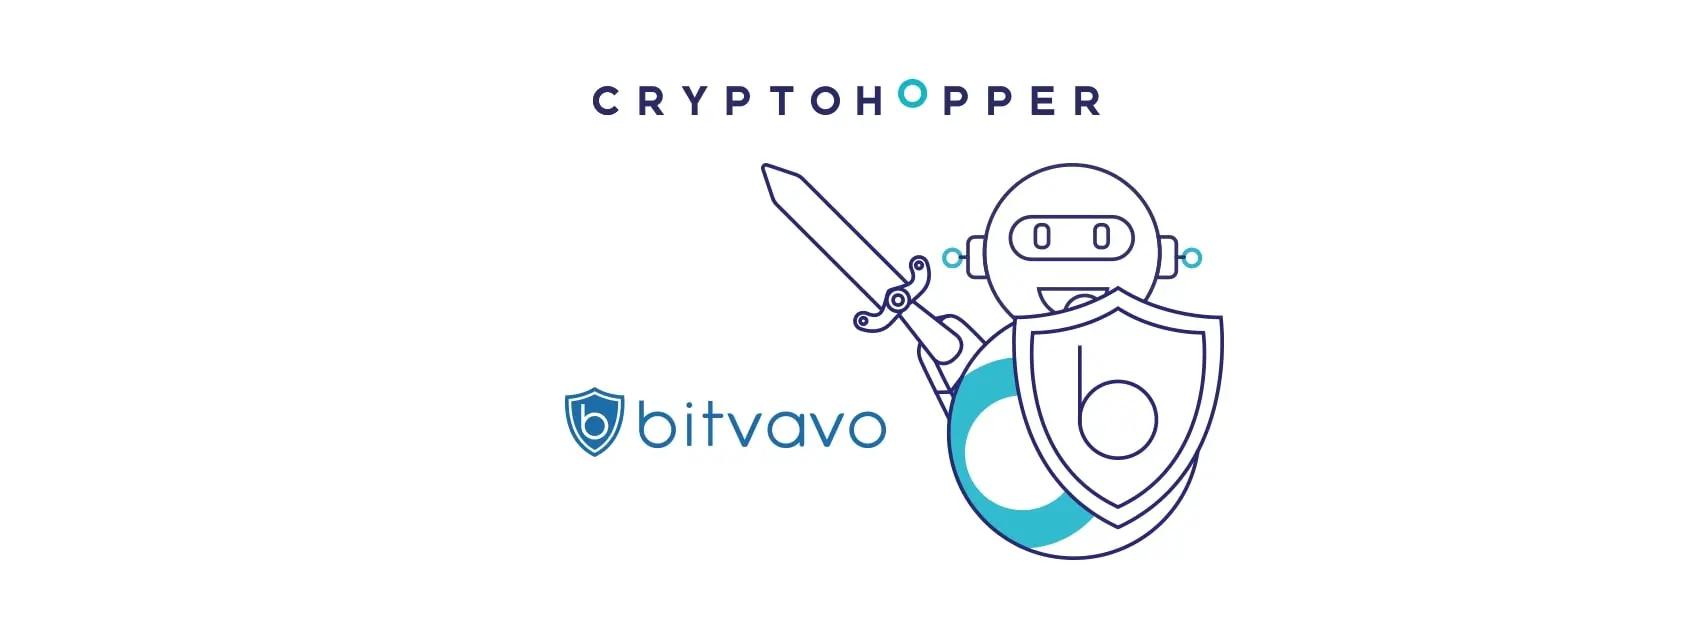 Cryptohopper X Bitvavo